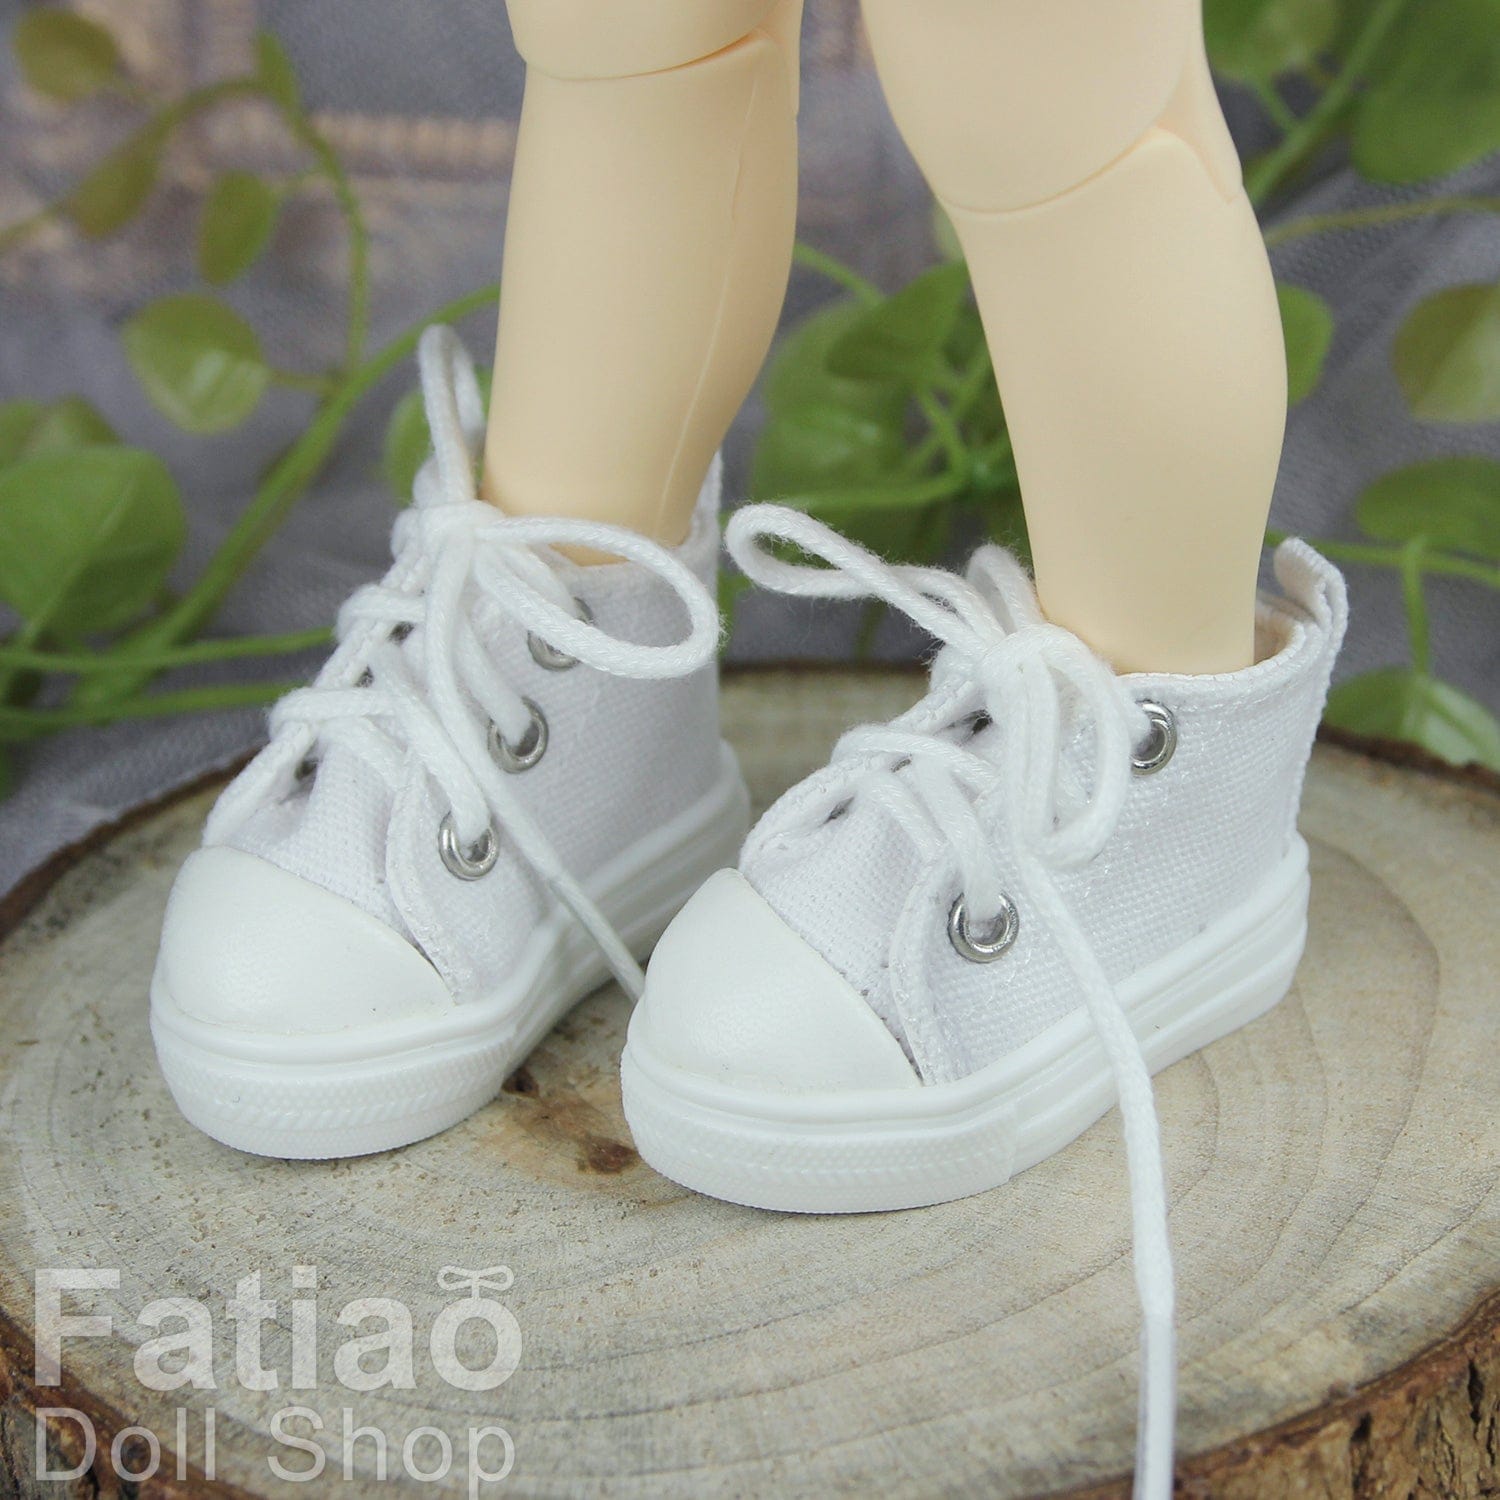 【Fatiao Doll Shop】帆布鞋 多色 / BJD 6分 YoSD iMda 3.0